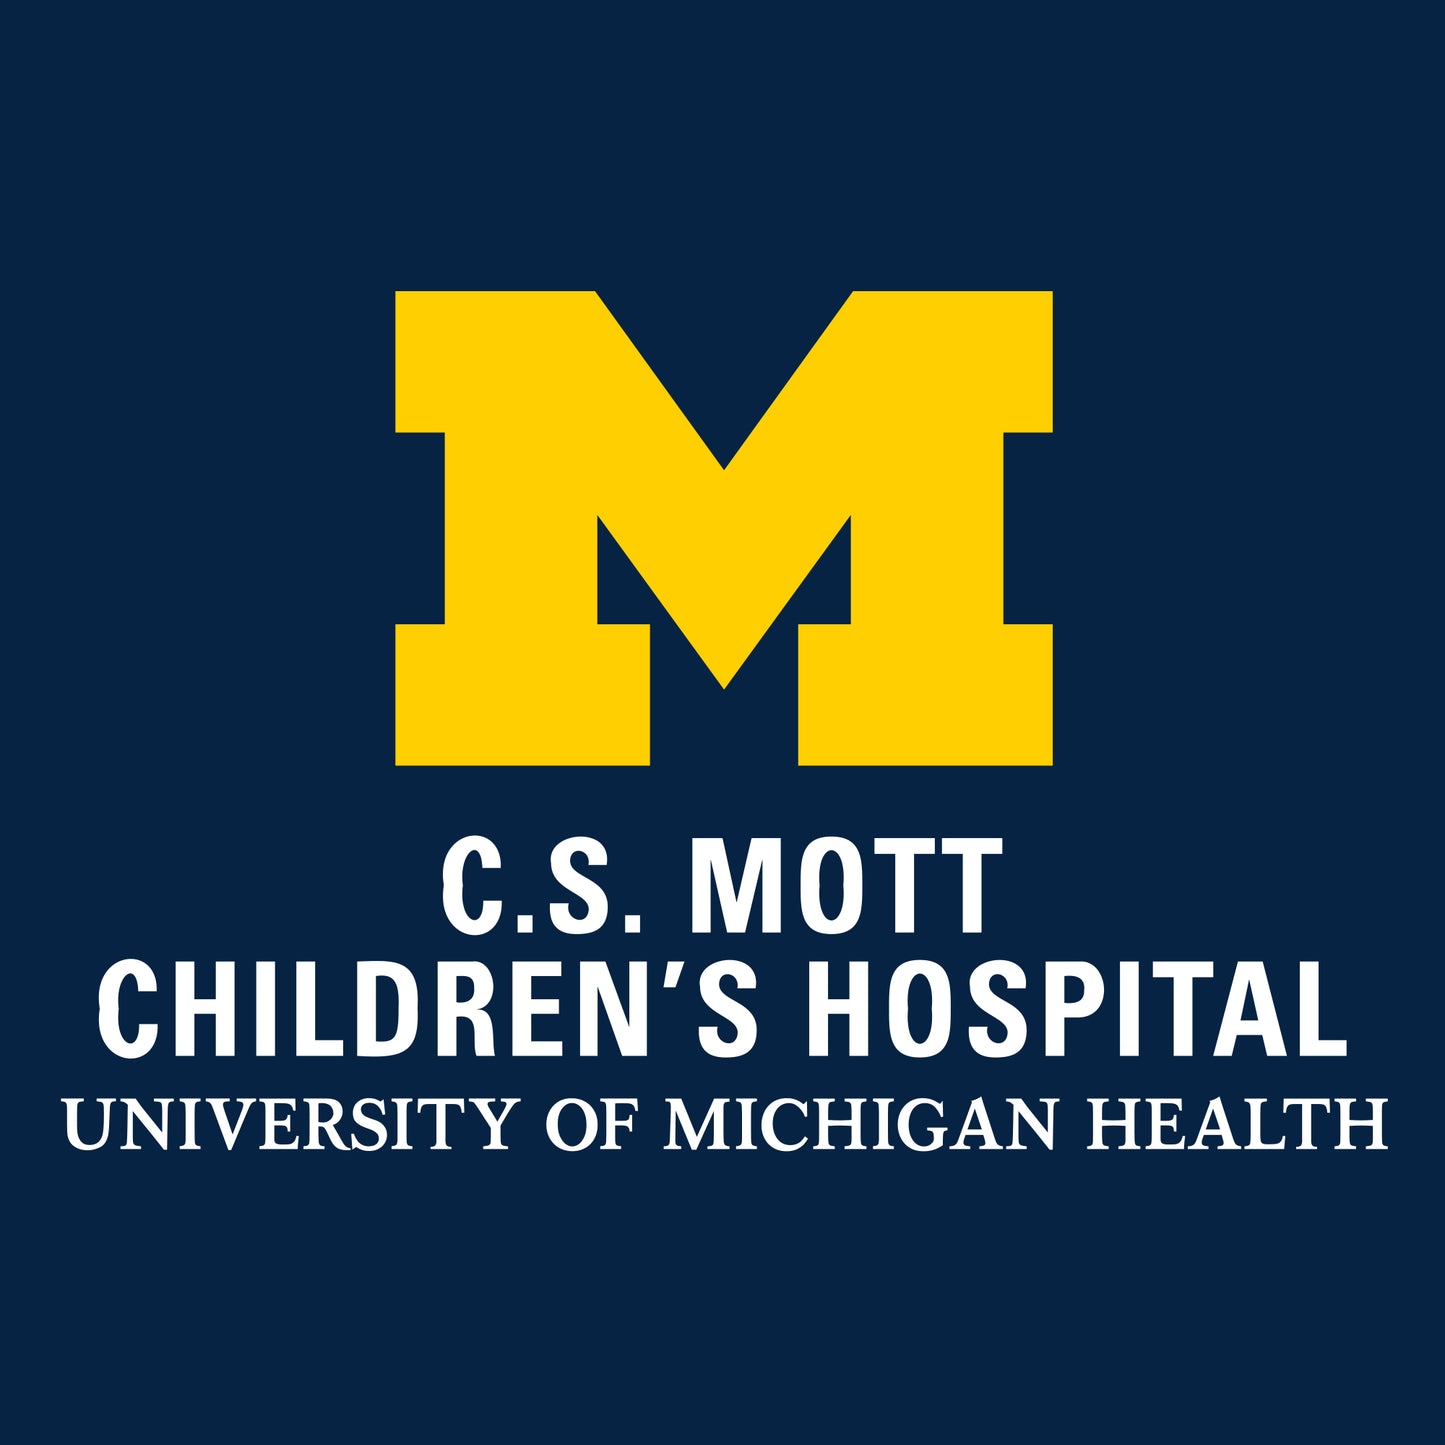 2023 Block Out Cancer Michigan Medicine Apparel Adult Microfleece Jacket - Navy